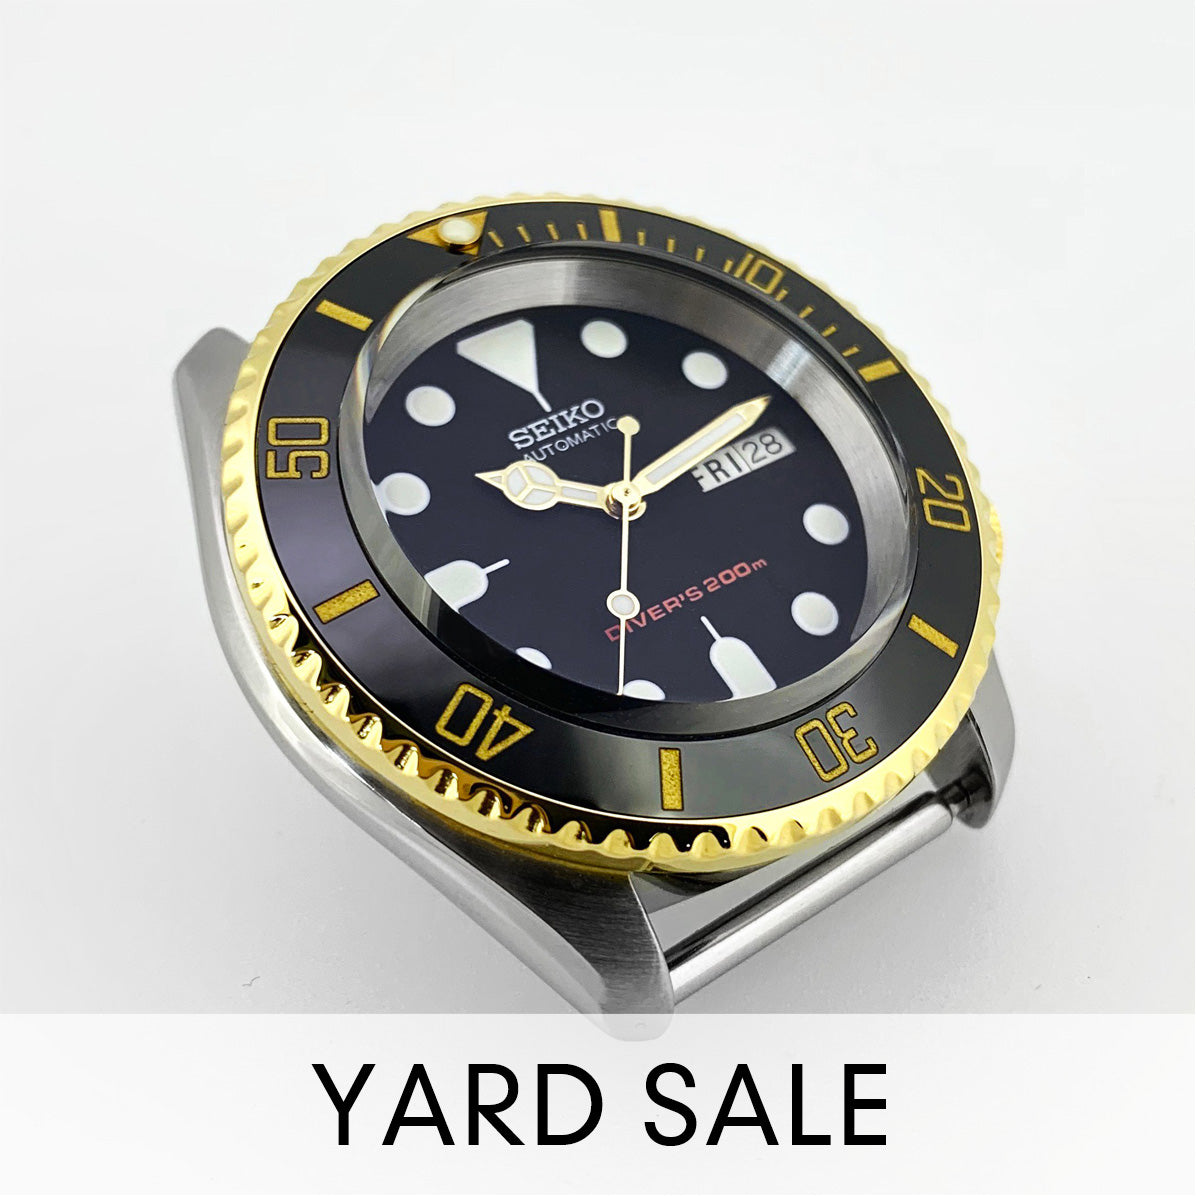 YARD SALE - Ceramic Insert - 007 Sub Black X Gold